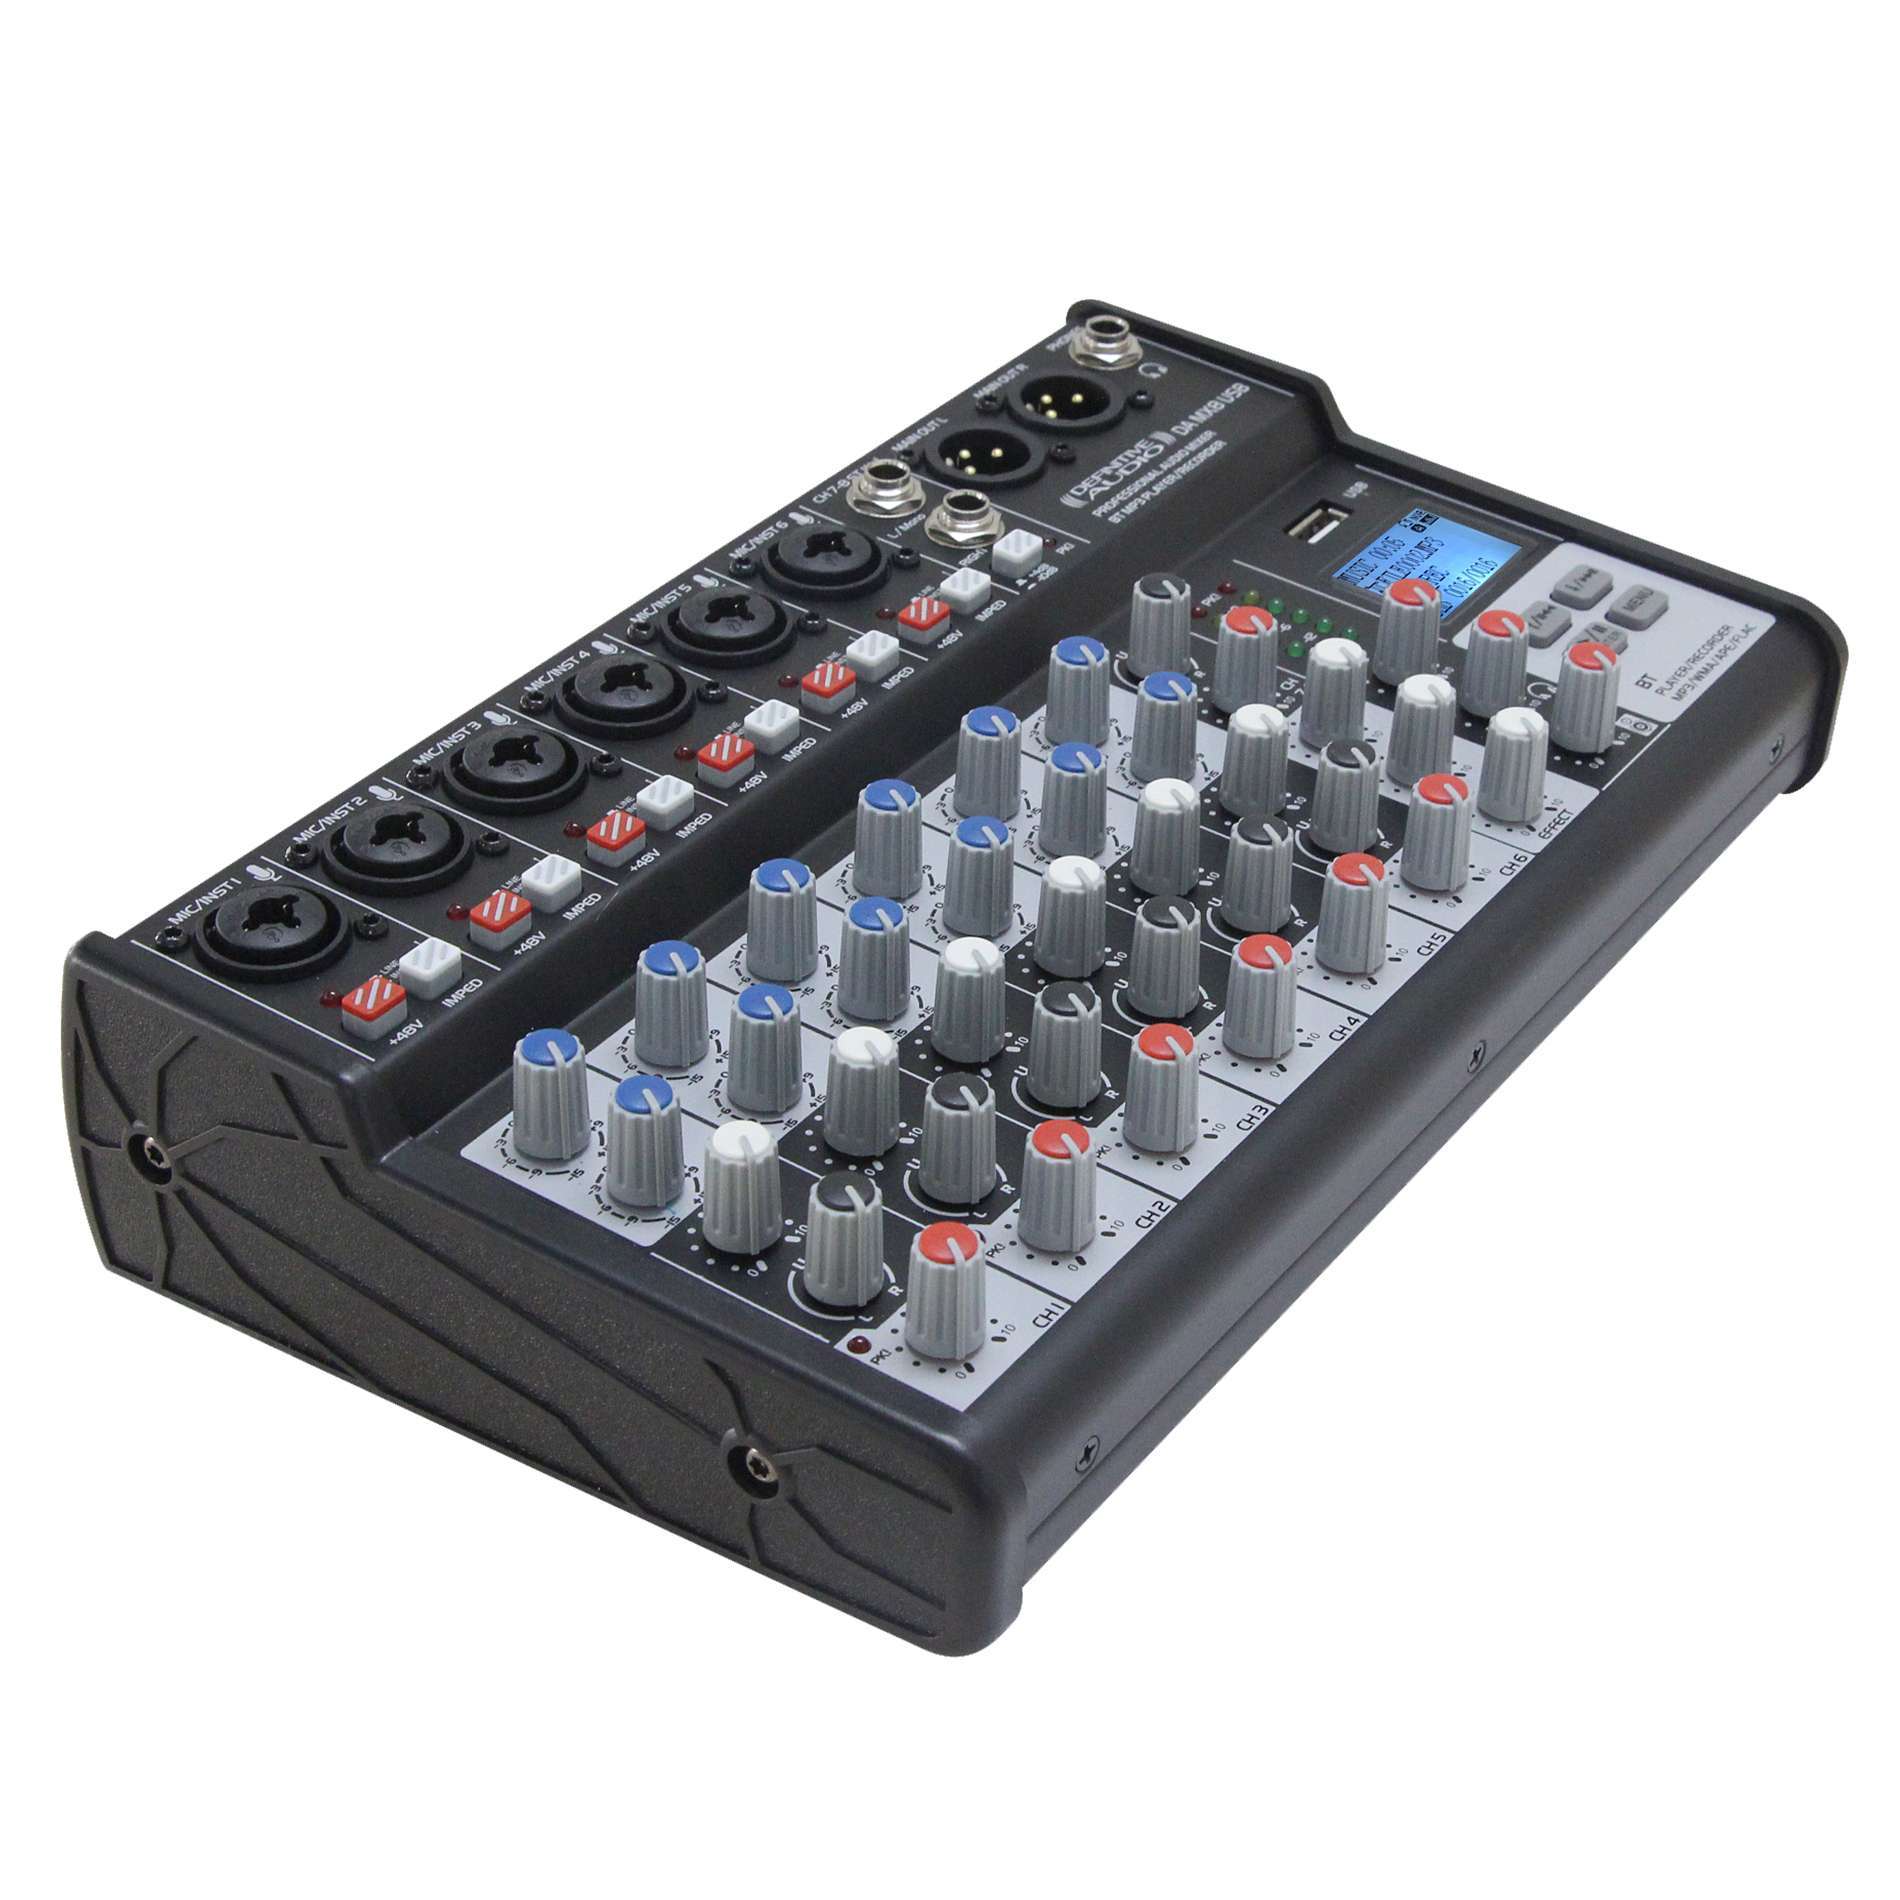 YAMAHA MG10XUF - Console de mixage 10 canaux audio USB 